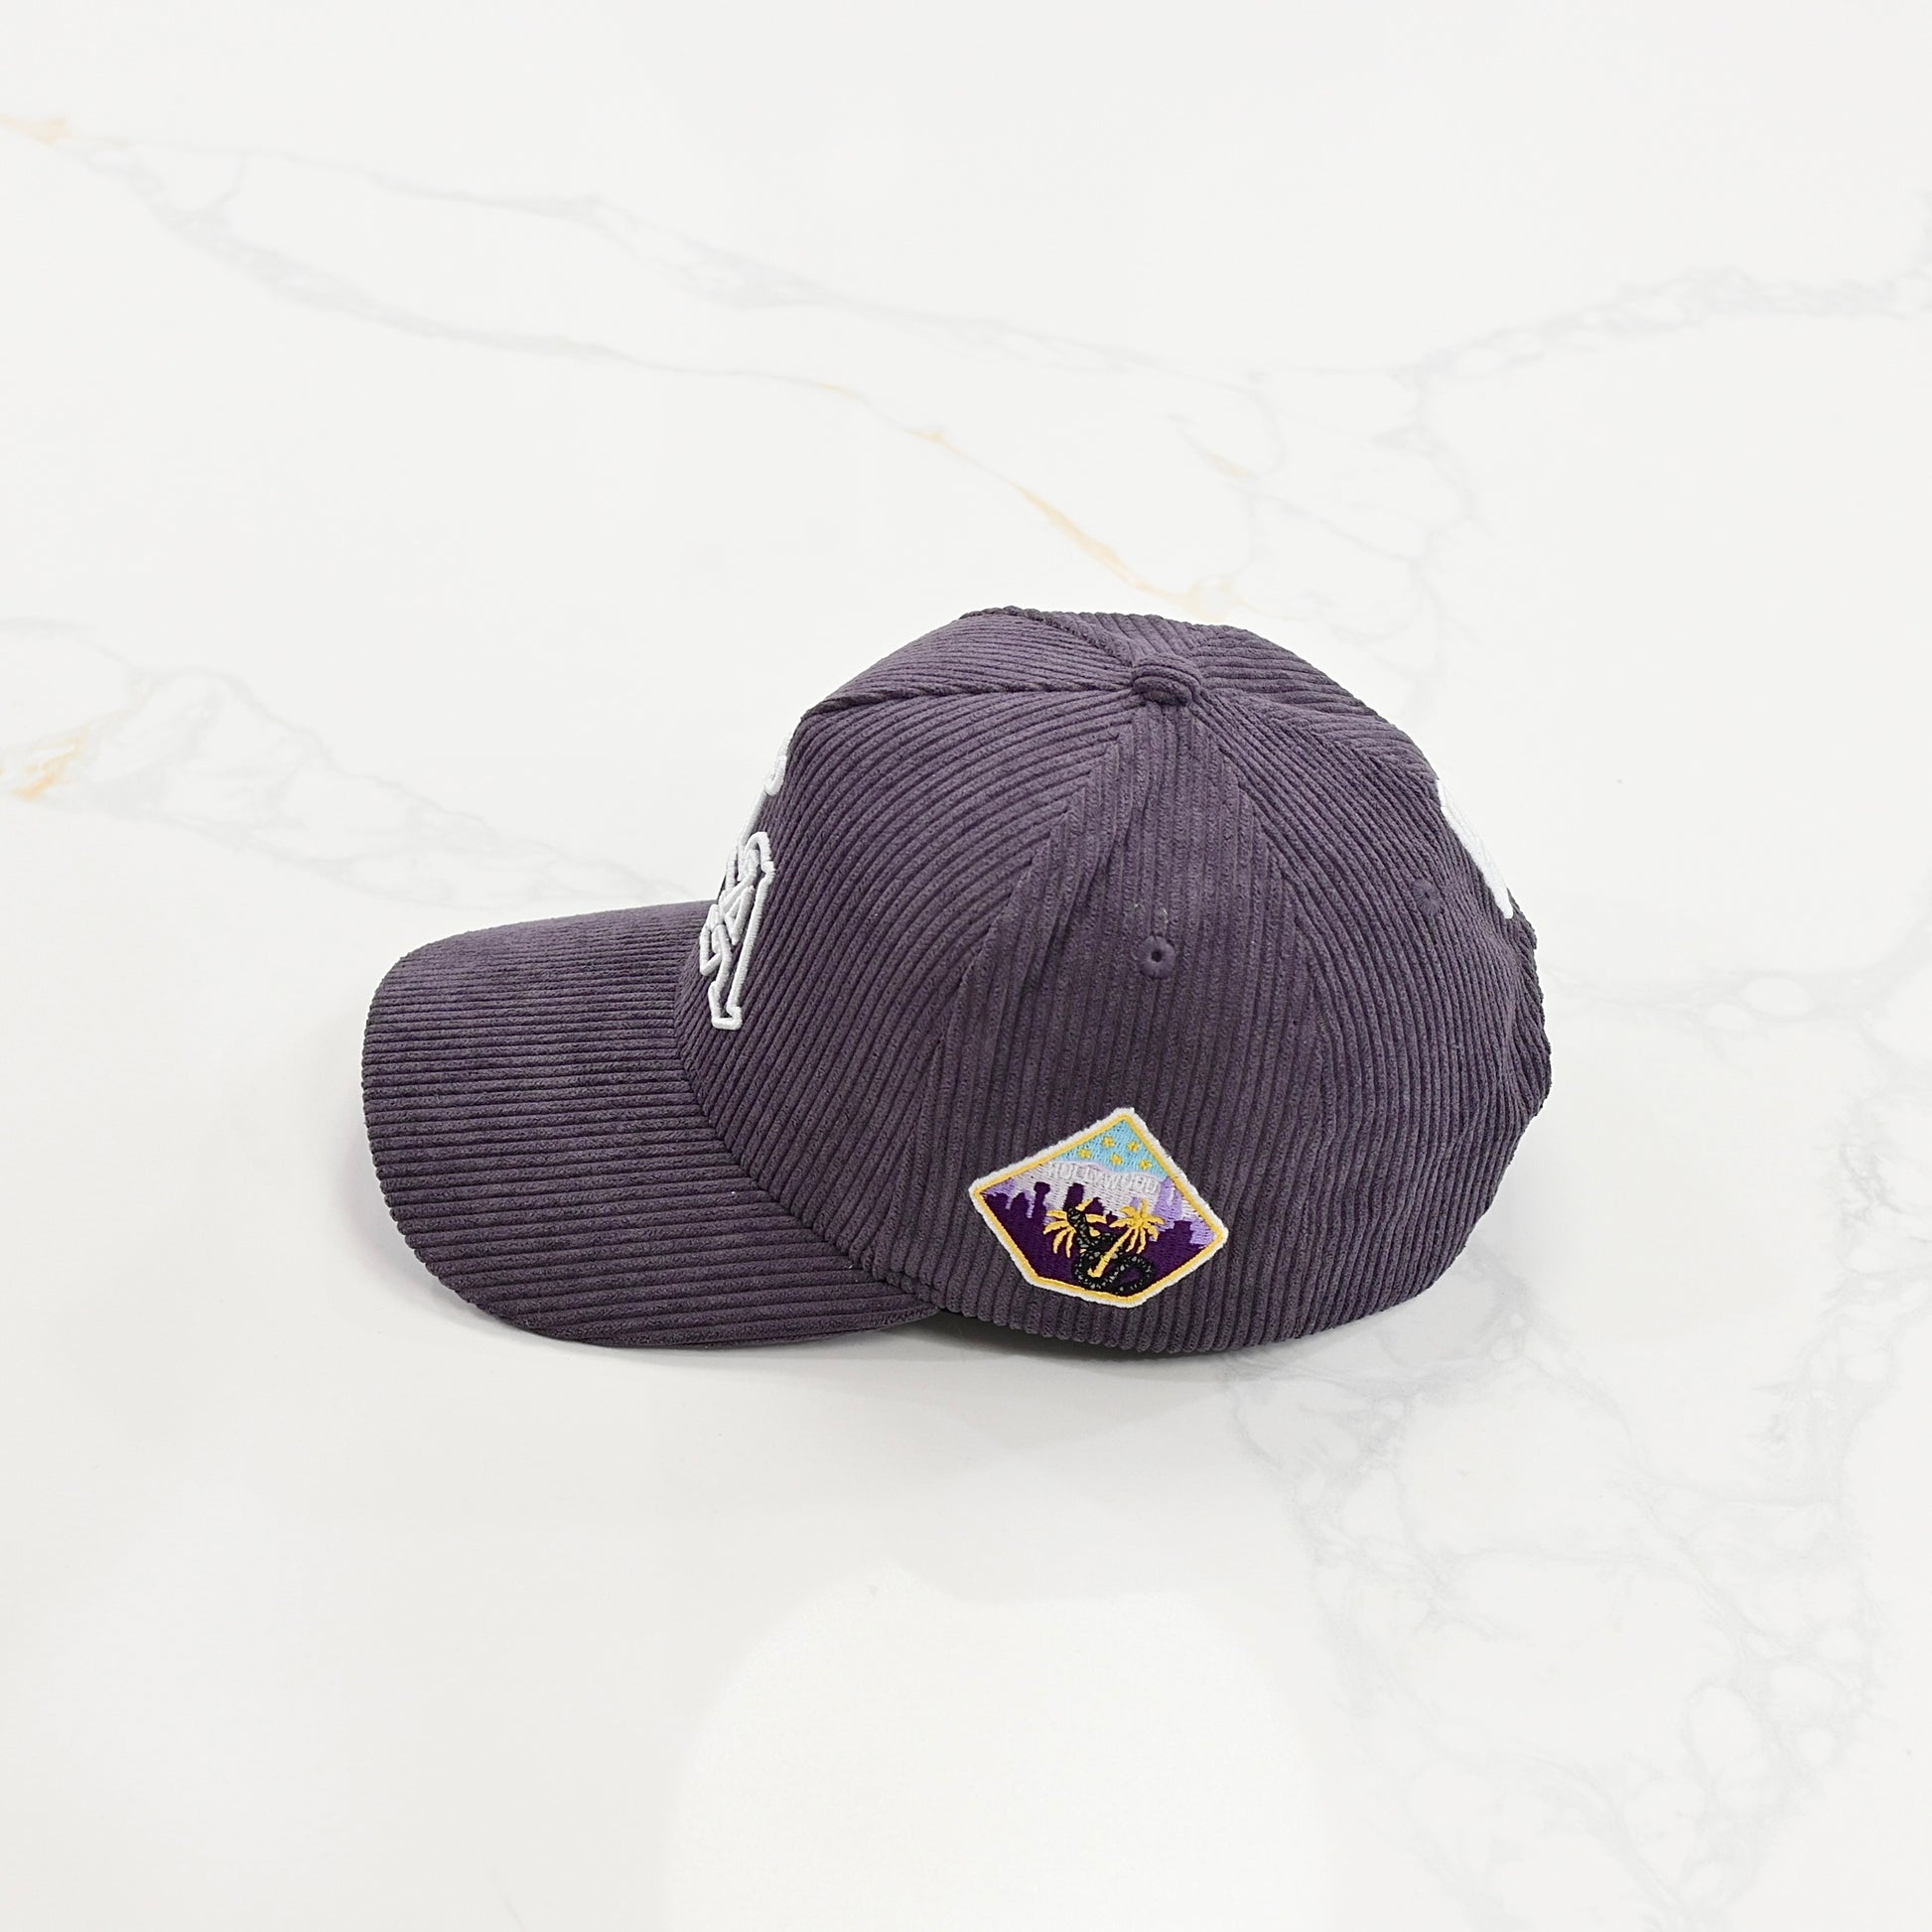 Mission Zero Vintage LA Lakers Snapback Hat - Alakoko Shop